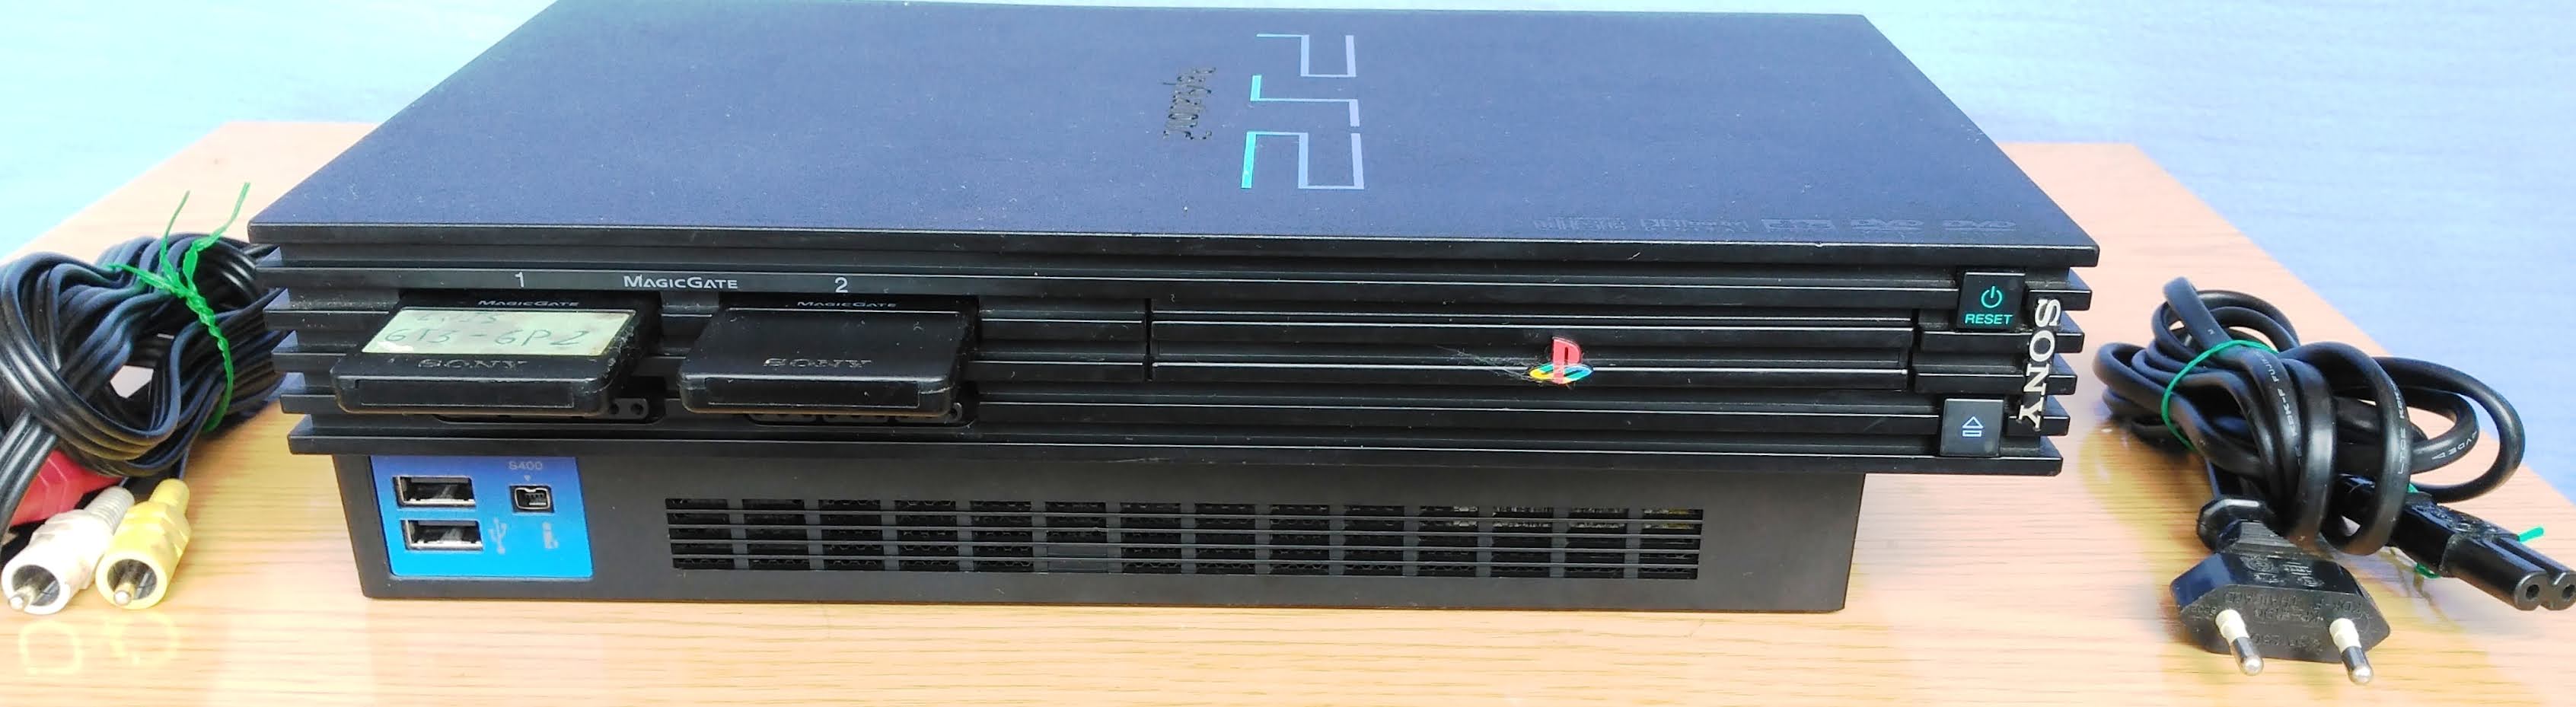 Retro Ordenadores Orty: PlayStation 2 (modelo SCPH 30004 R) con adaptador  de red (2000)